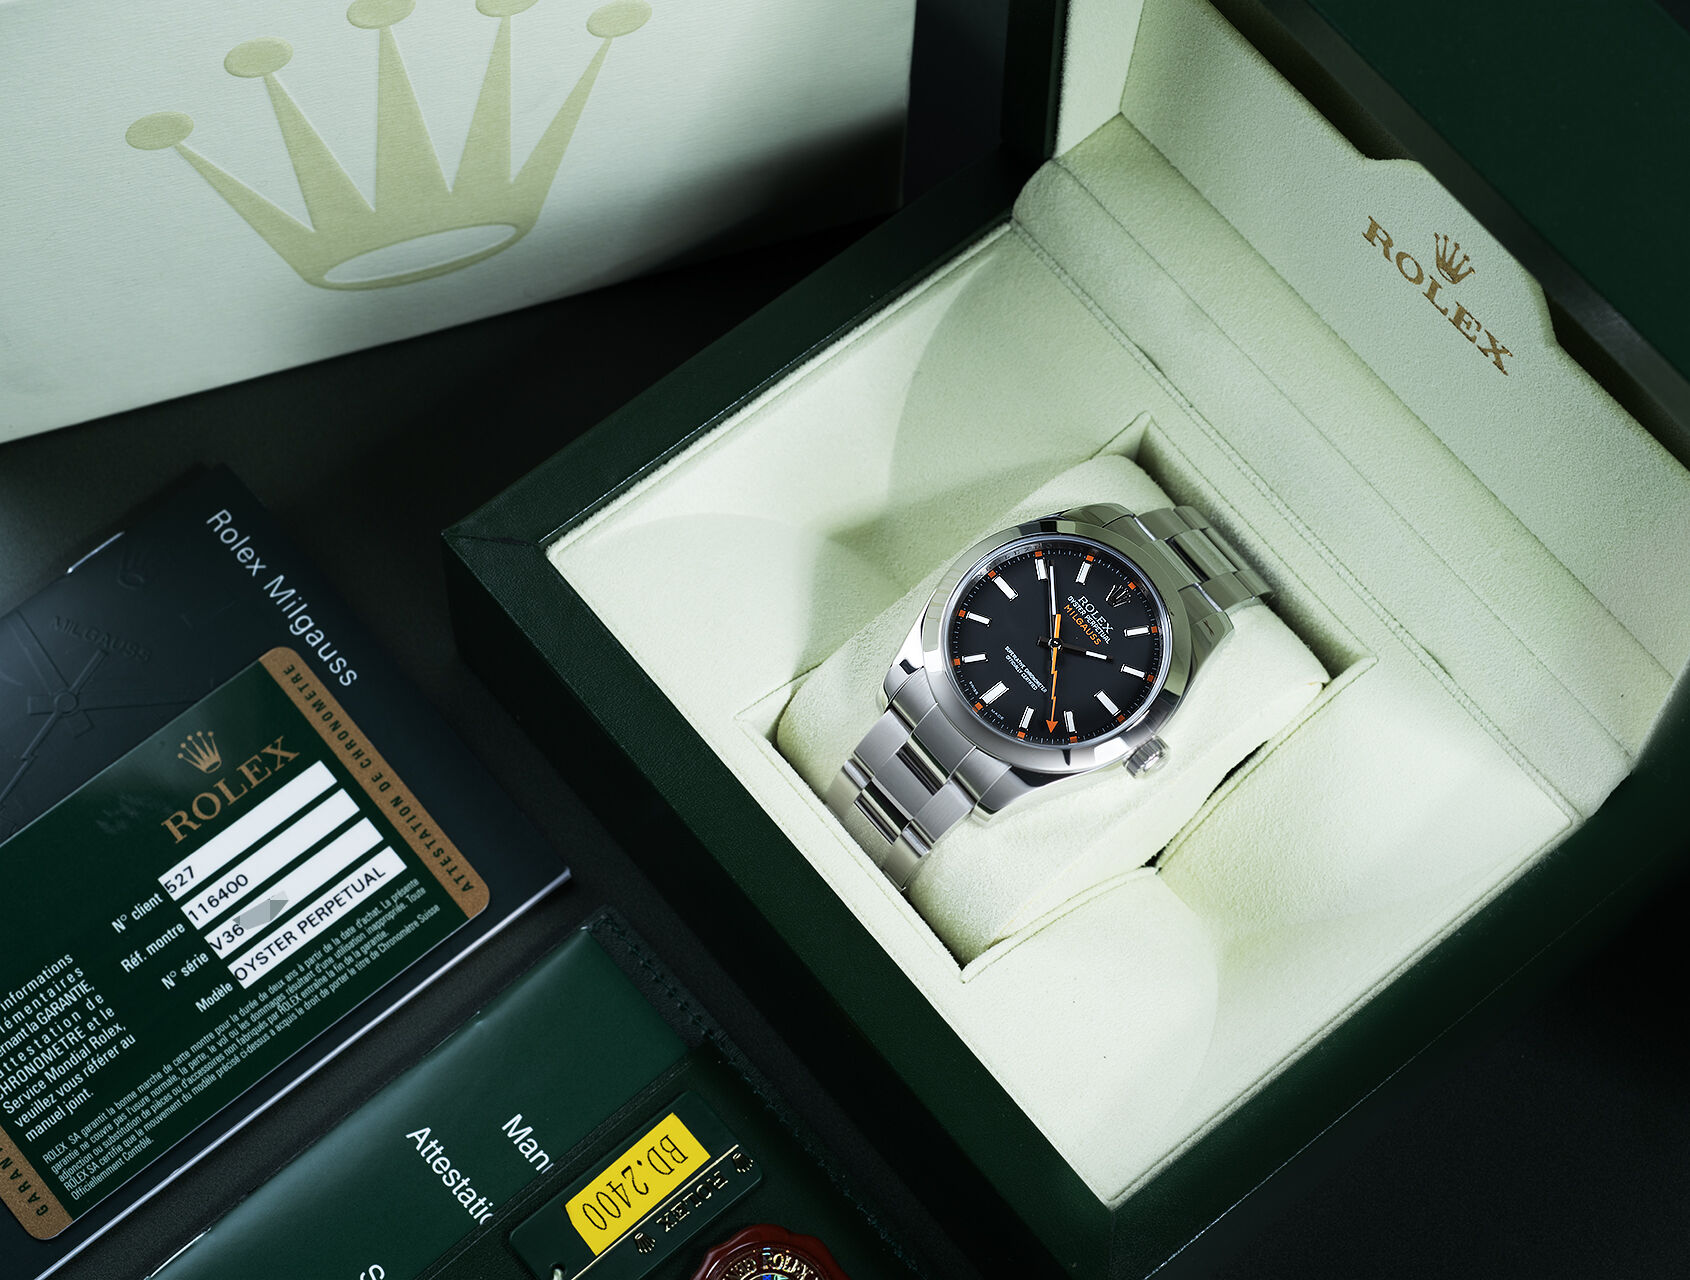 ref 116400 | 116400 - Box & Certificate | Rolex Milgauss